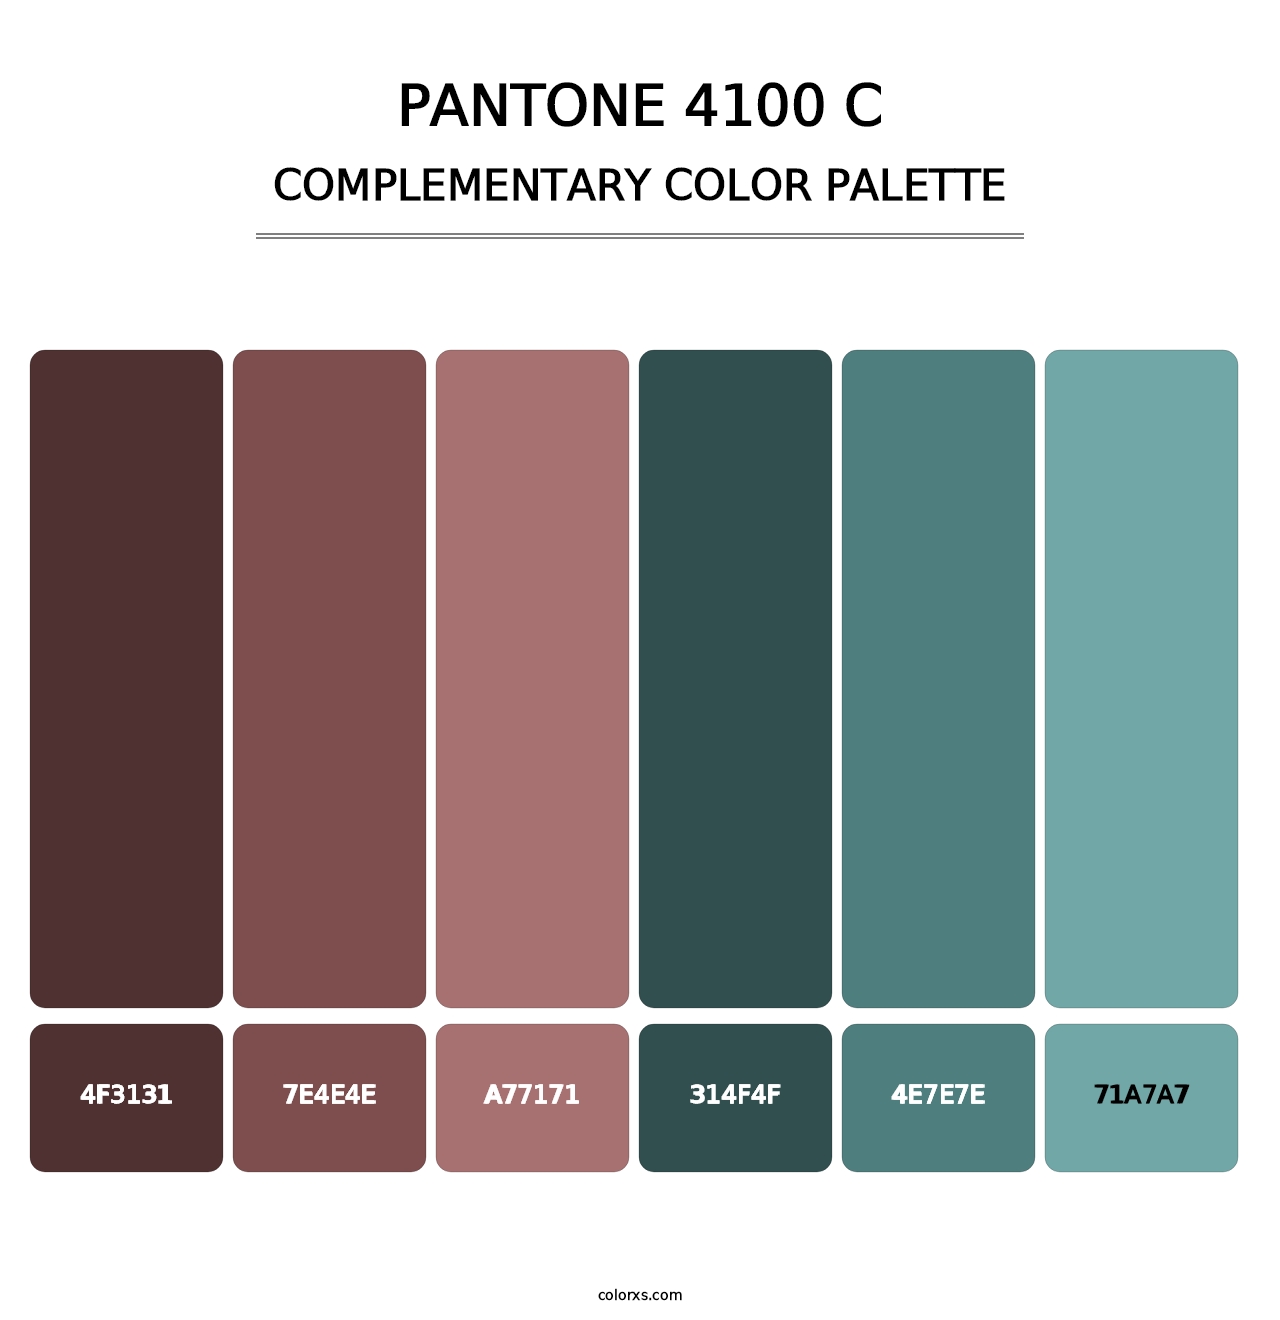 PANTONE 4100 C - Complementary Color Palette